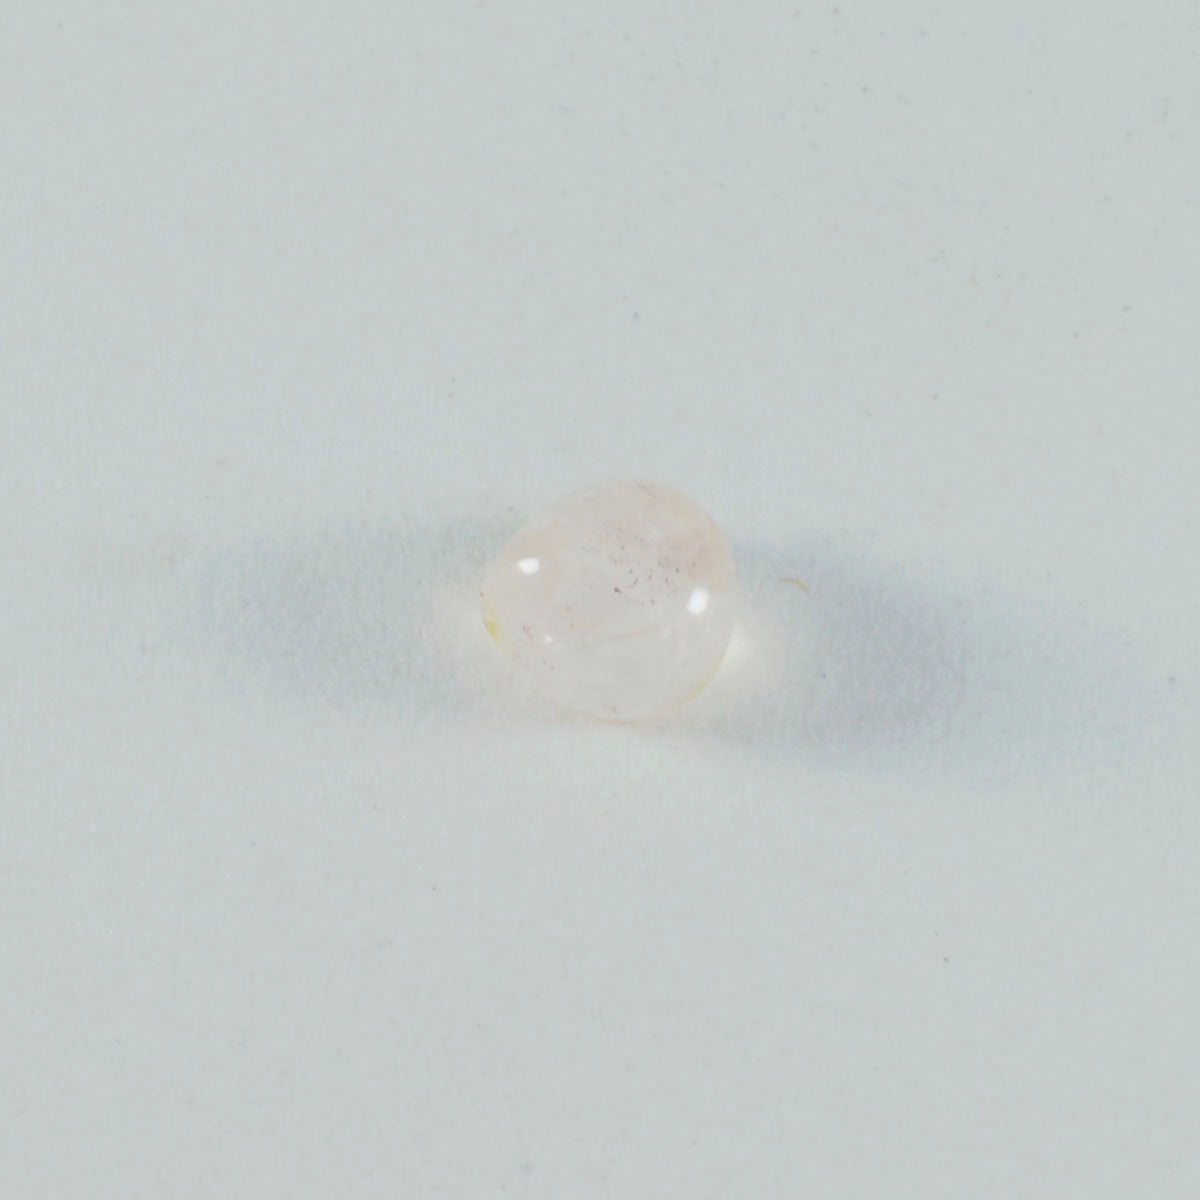 riyogems 1 шт. розовый кварц кабошон 9x9 мм в форме сердца милый качественный камень